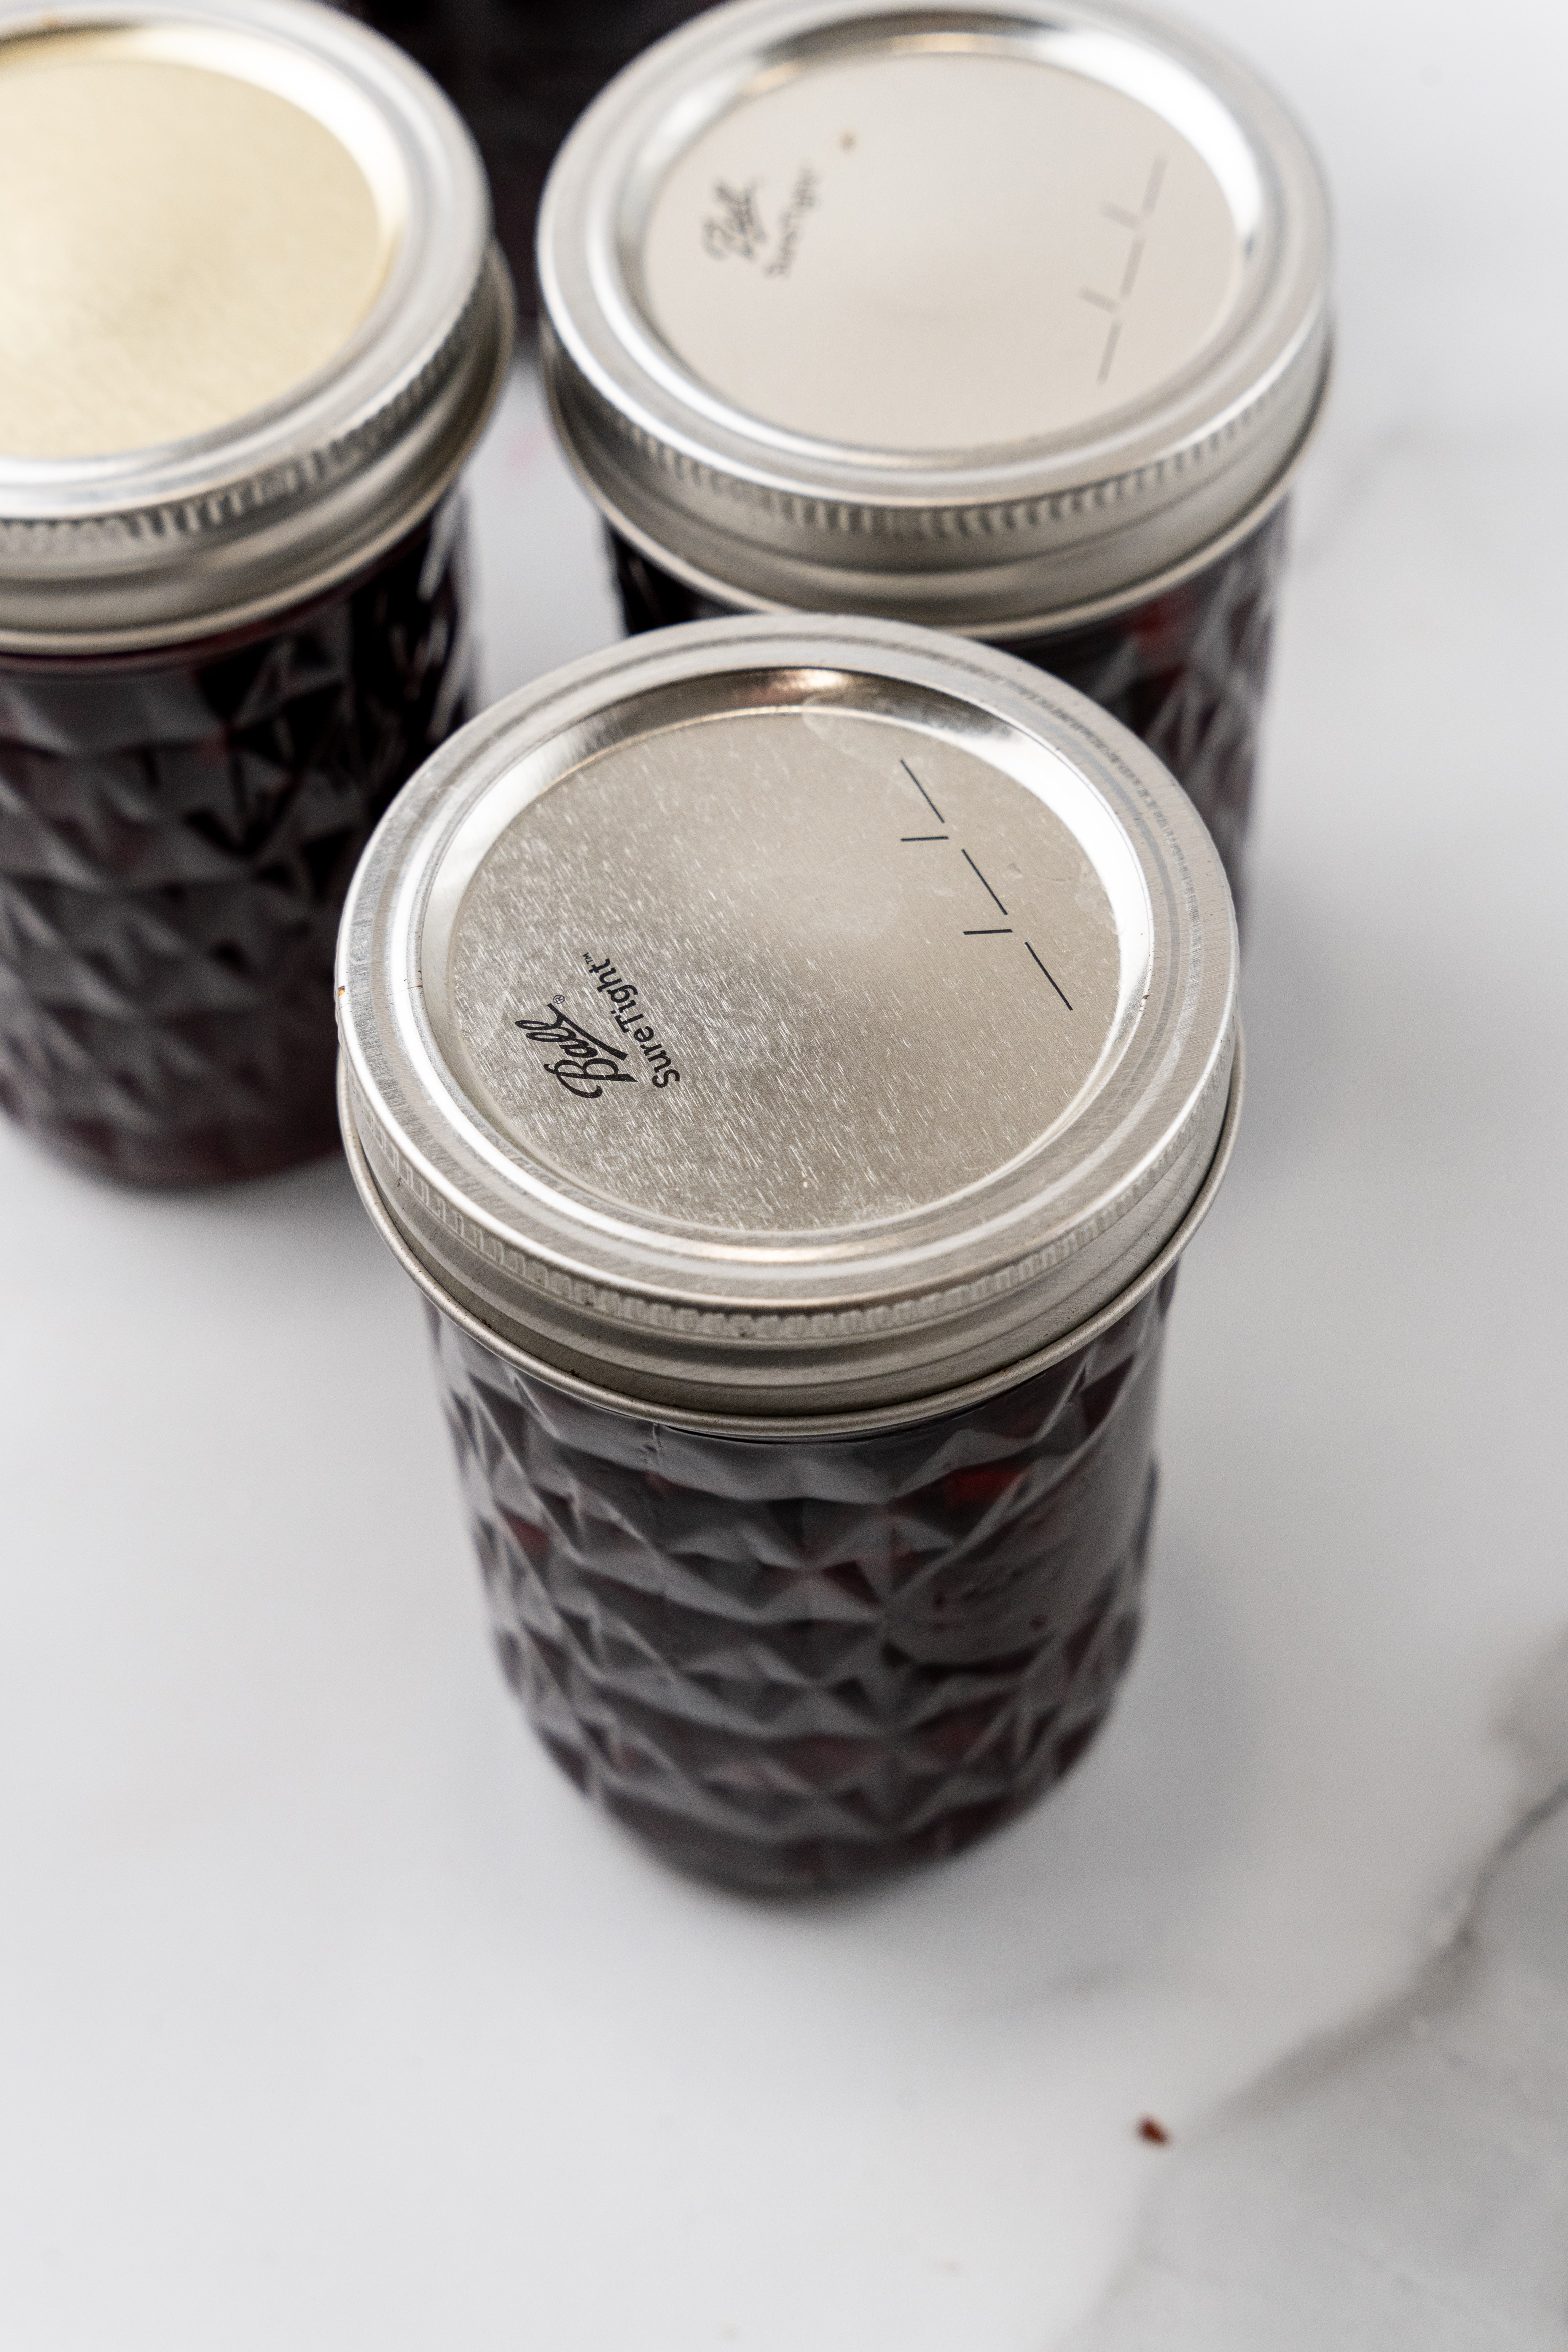 cherry habanero jam in three small glass jars with metal lids